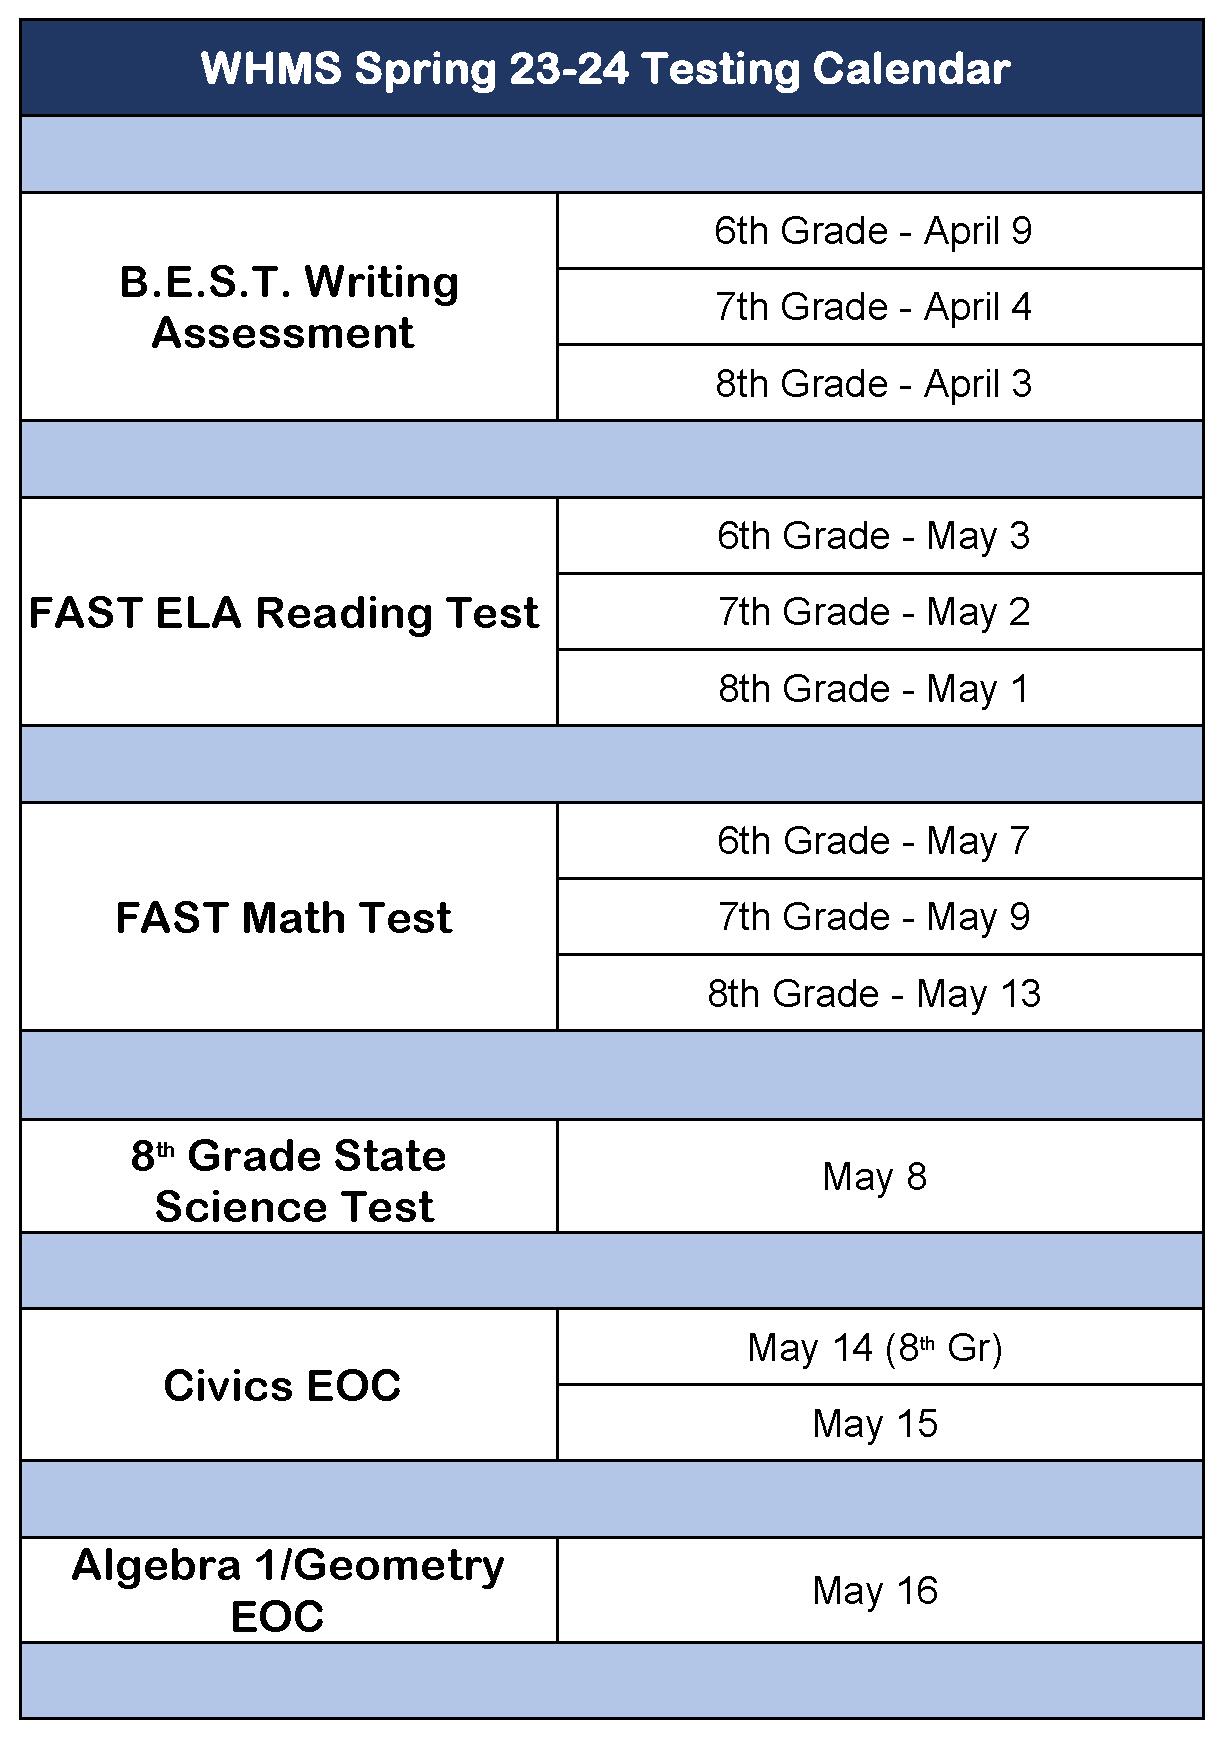 WHMS Spring 23-24 Testing Calendar